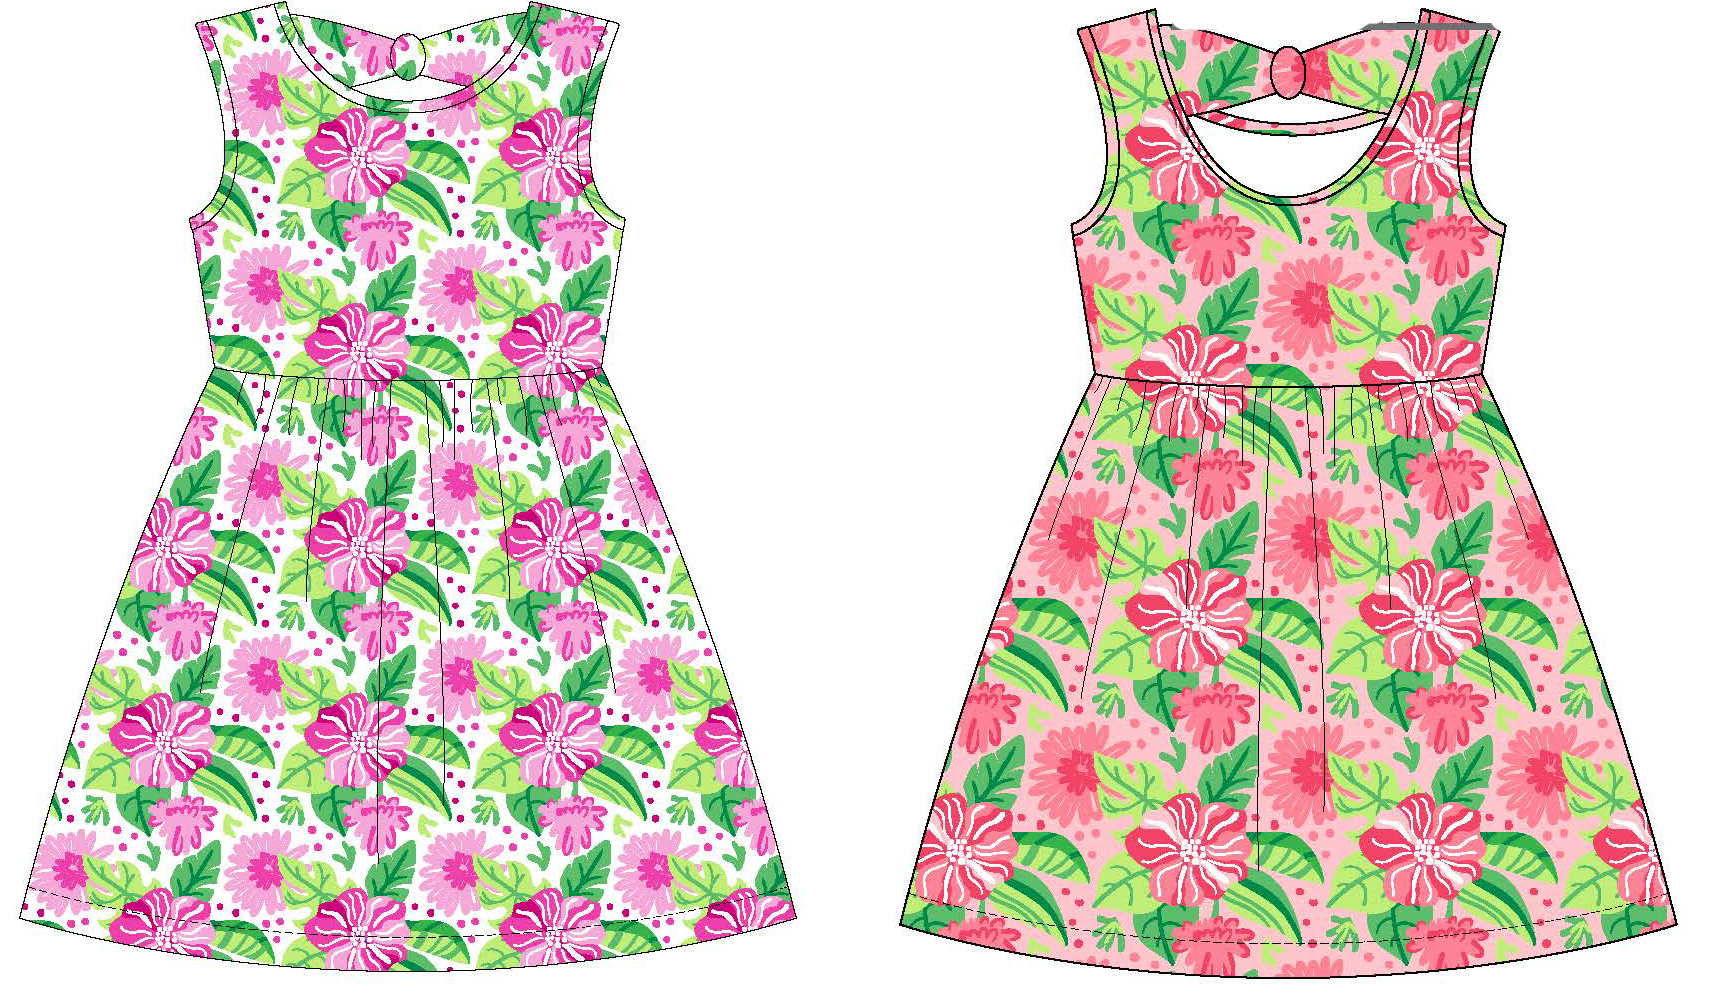 Girl's Printed Knit Sleeveless Dress w/ UNDERWEAR Panty - Tropical Floral Print - Sizes 4-6X